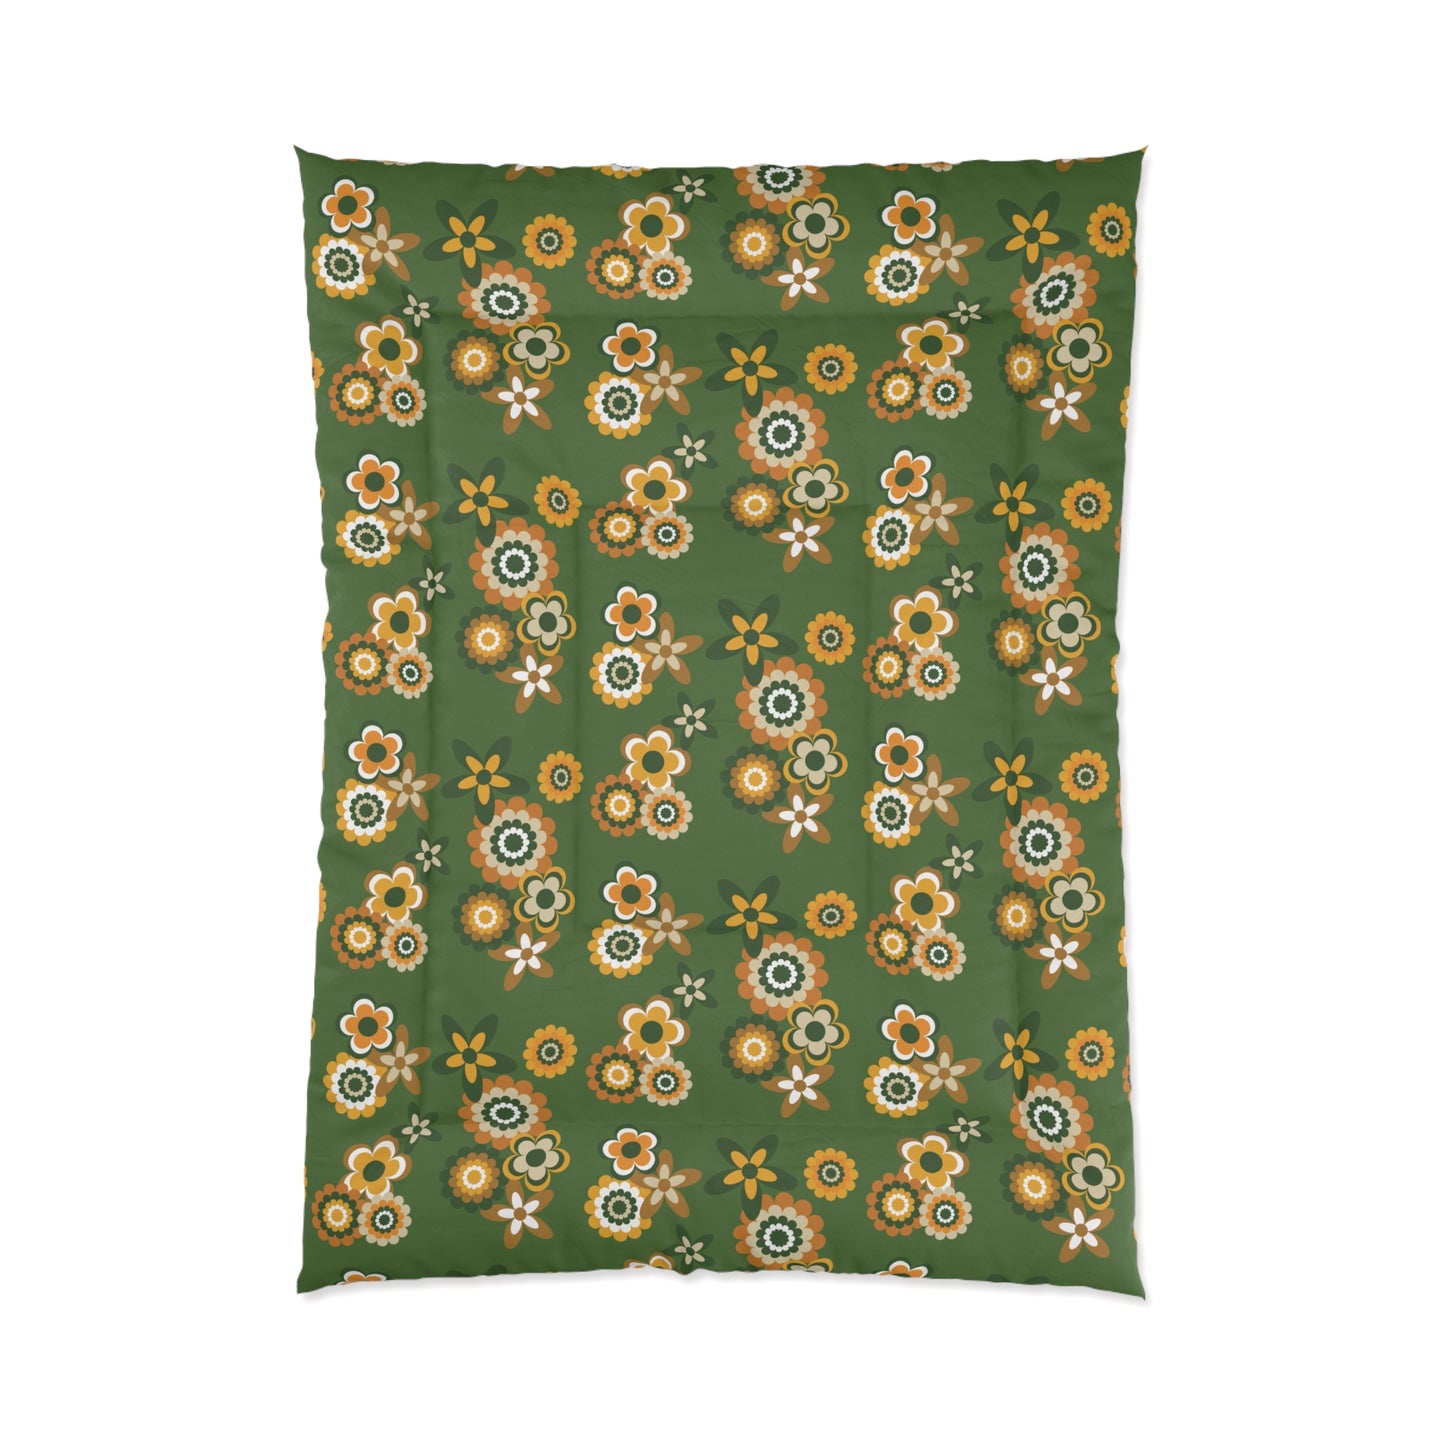 Retro 60s 70s Groovy Flowers Mid Century Mod Mustard & Green Comforter